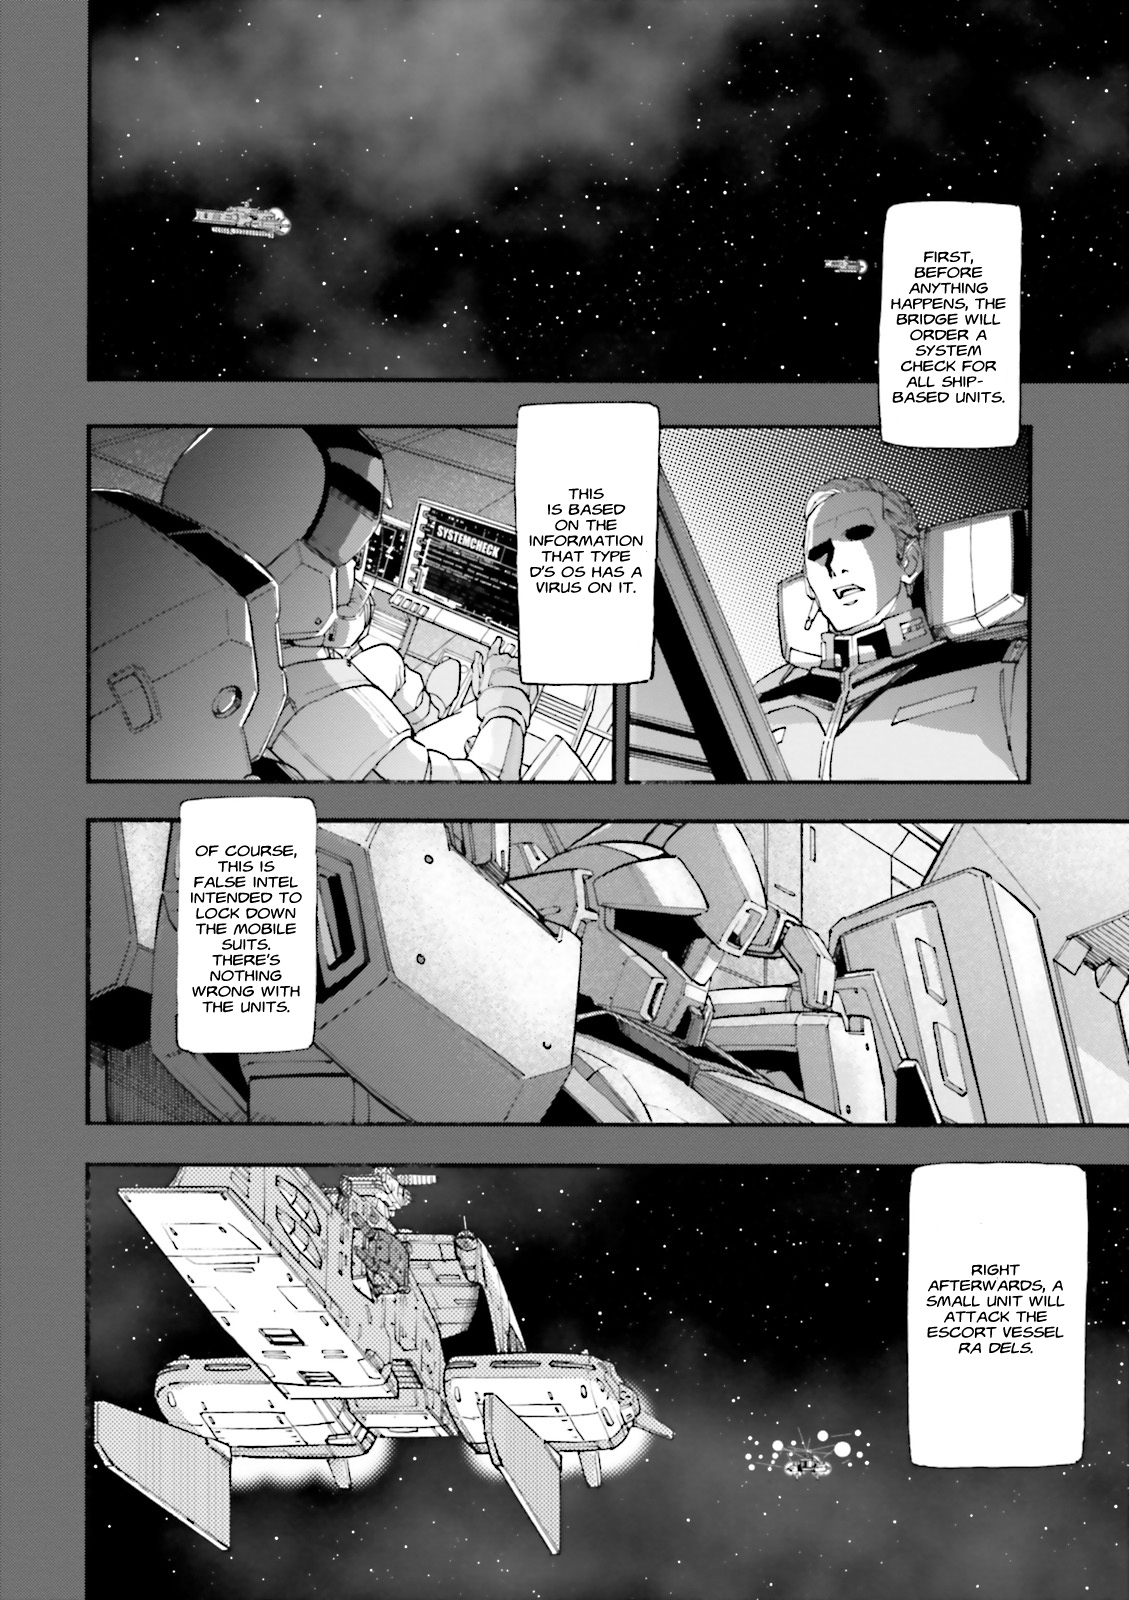 Kidou Senshi Gundam UC (Unicorn) Bande Dessinée: Episode 0 Vol. 1 Ch. 5 Neo Zeon <Dangerous Signs>